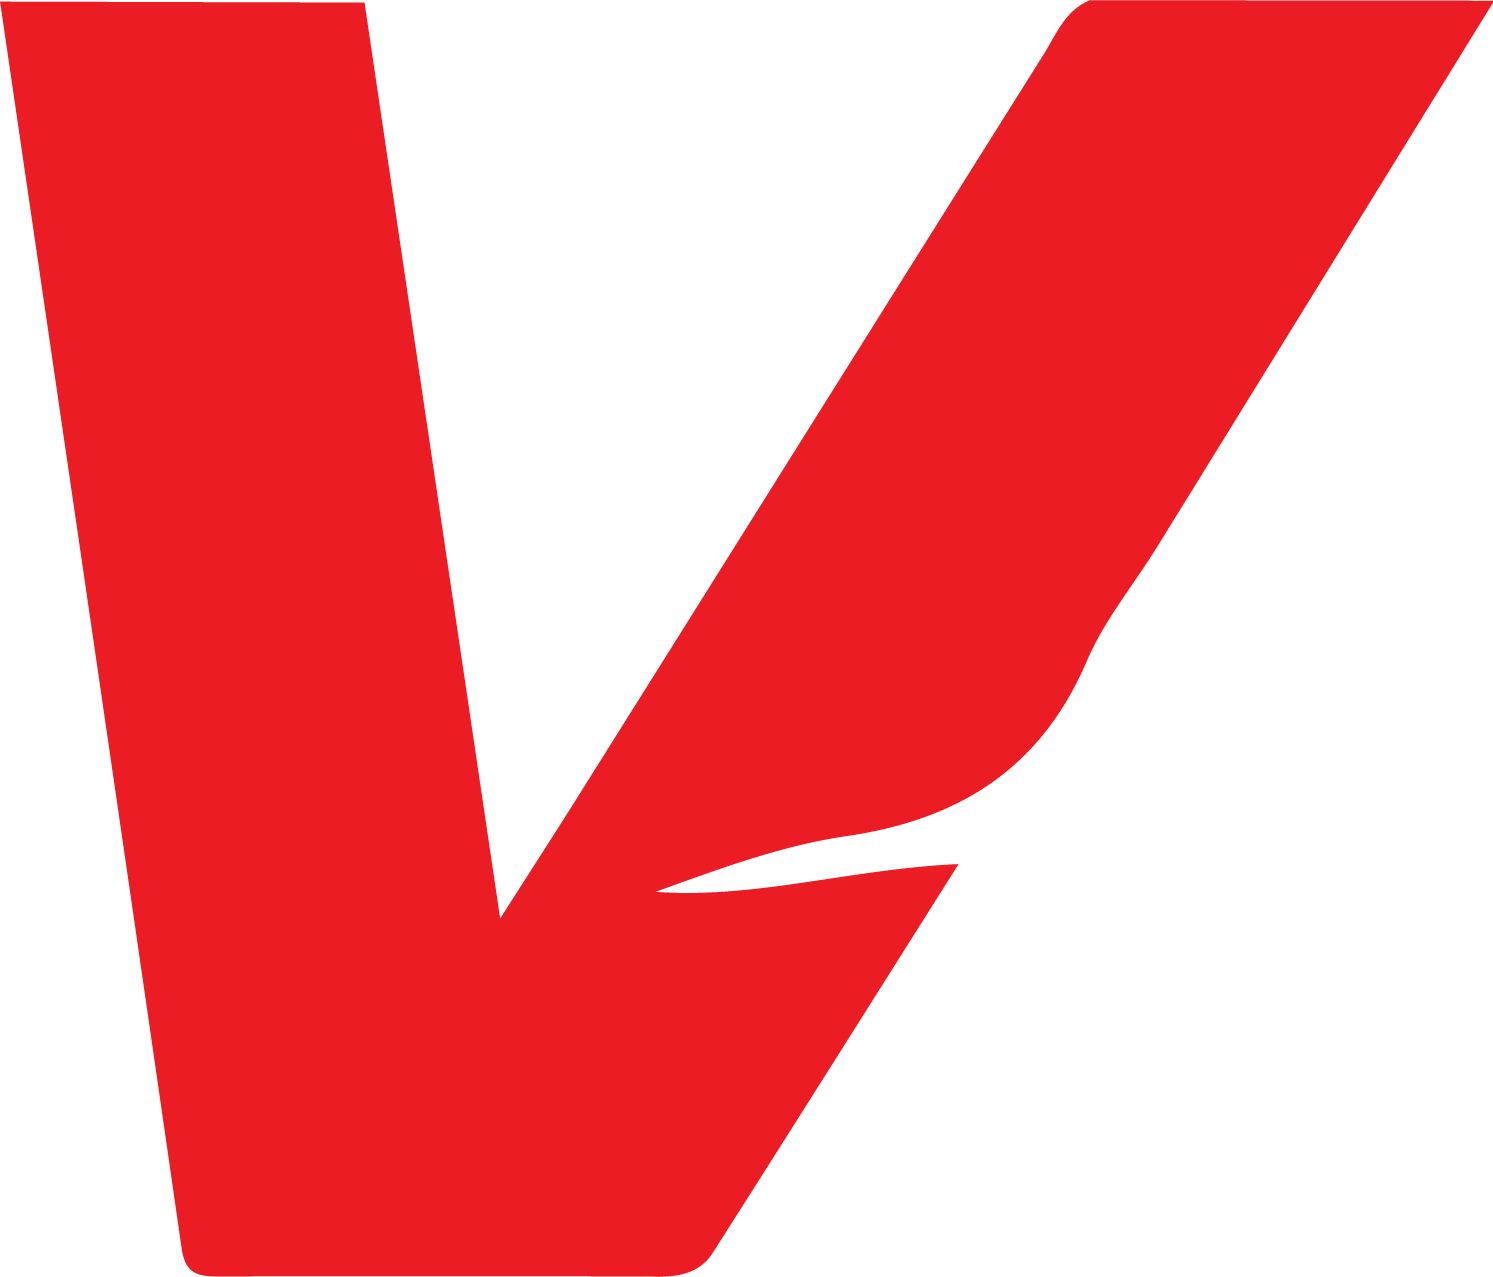 Vip club logo design luxury elegant golden badge Vector Image